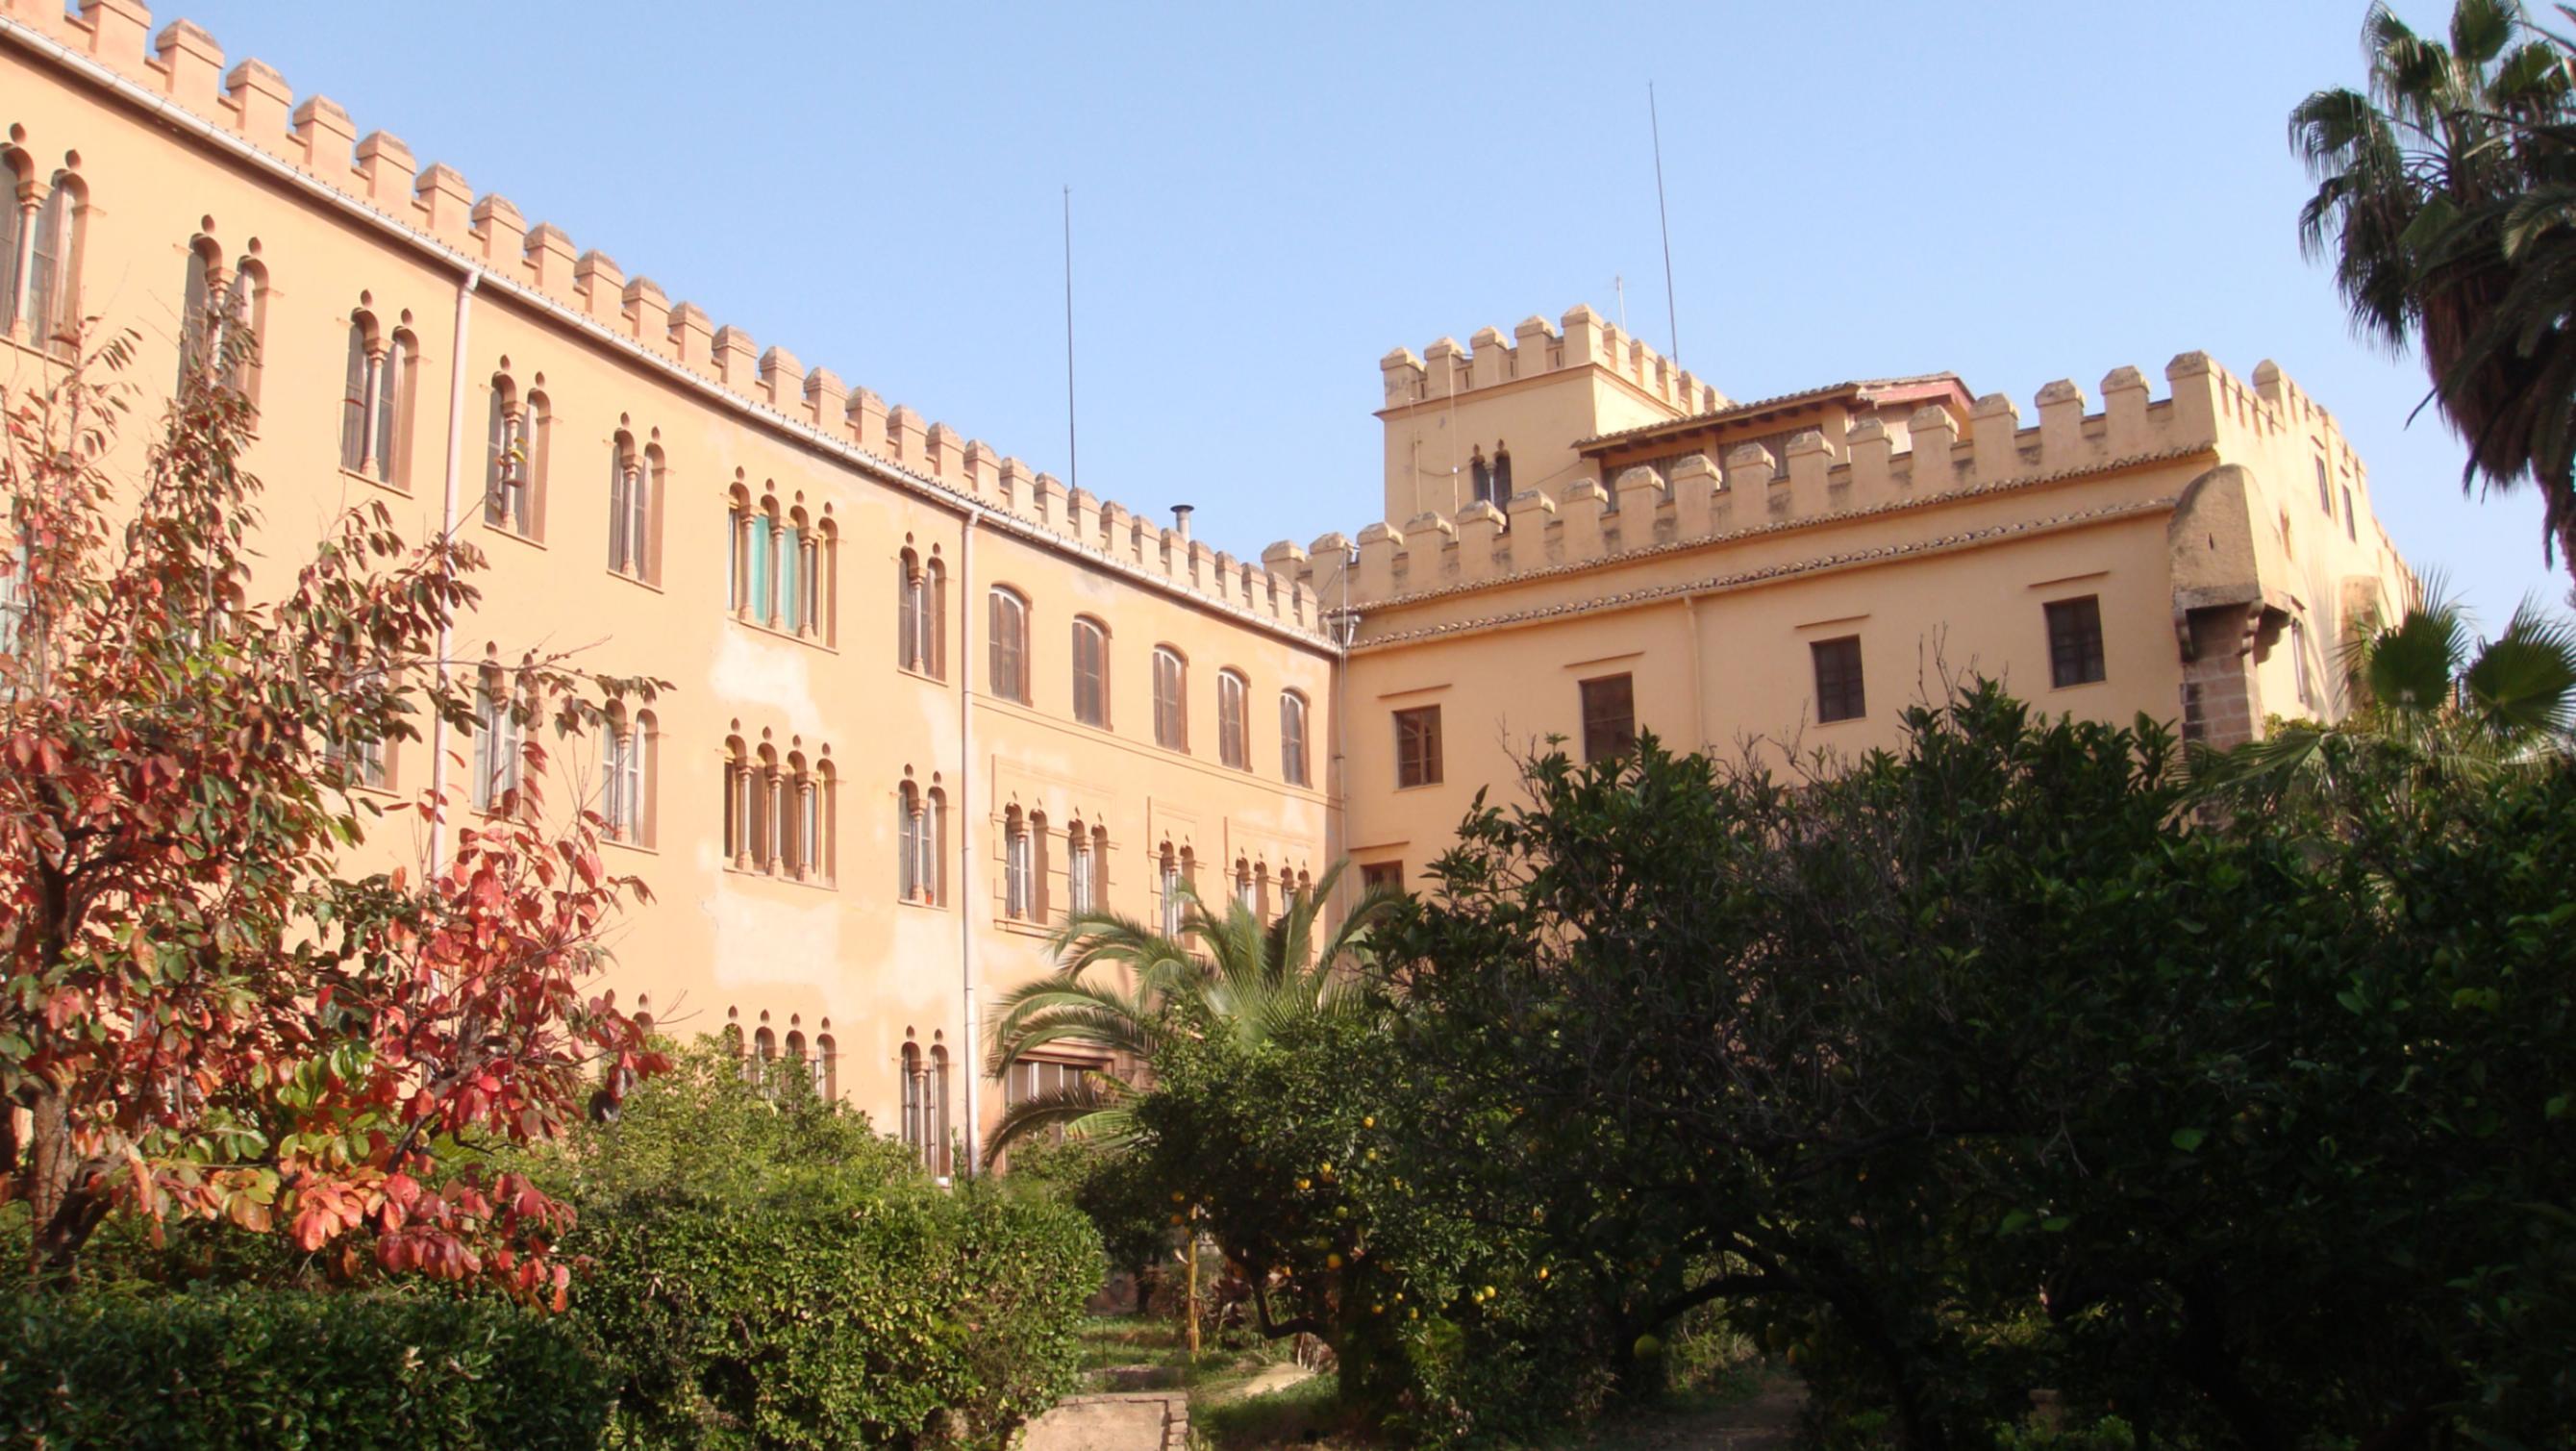 Image of Colegio Mayor San Juan de la Ribera